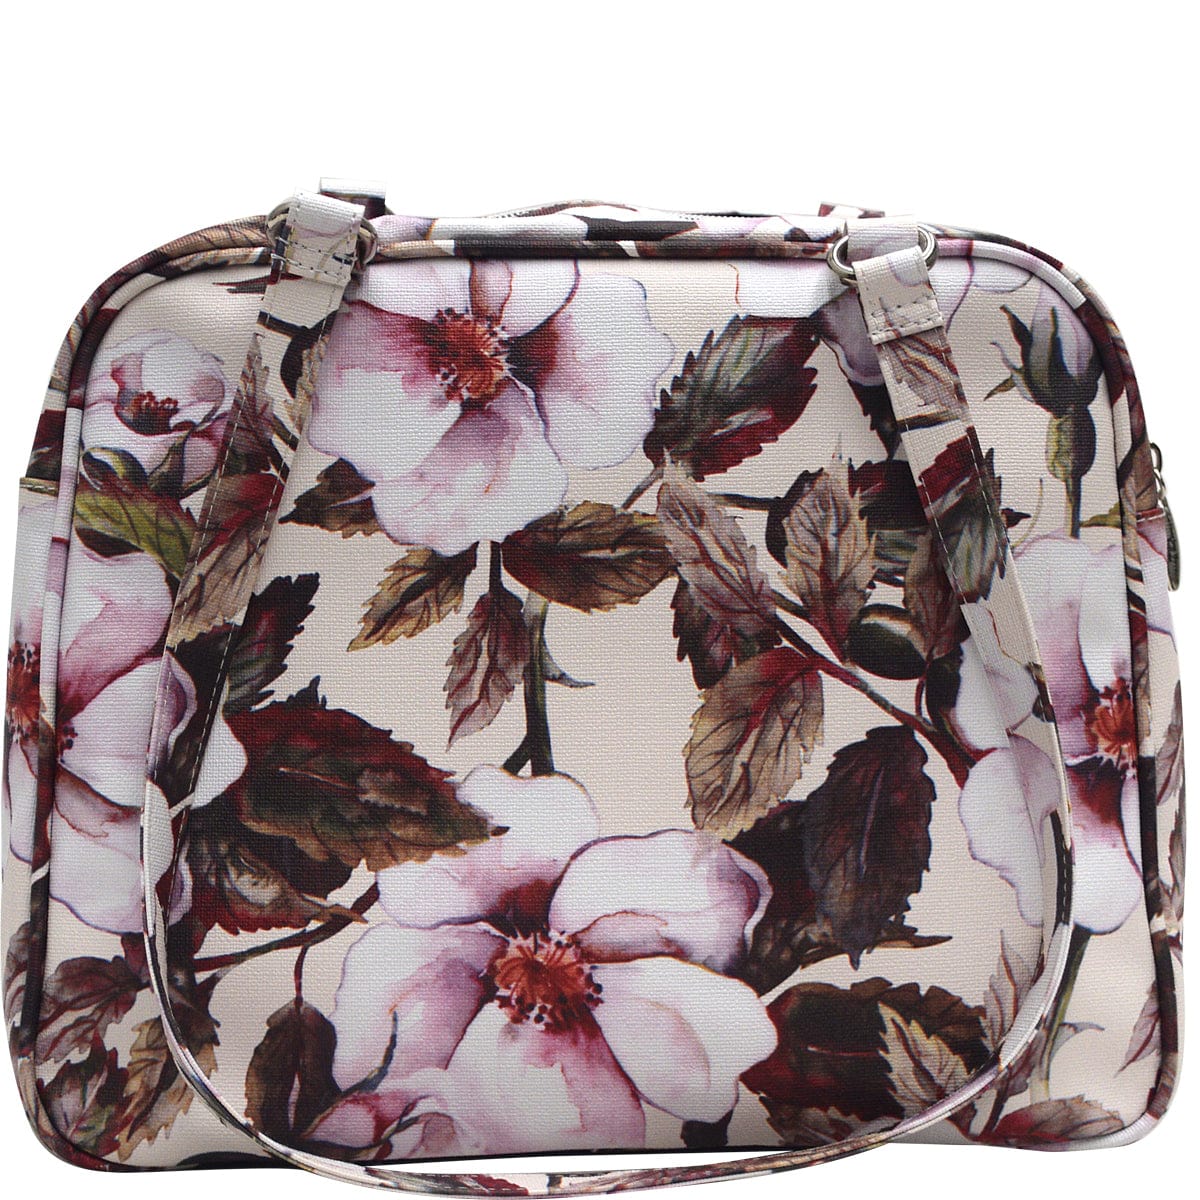 Hazel Handbag - Dusty Pink Floral - 50% off